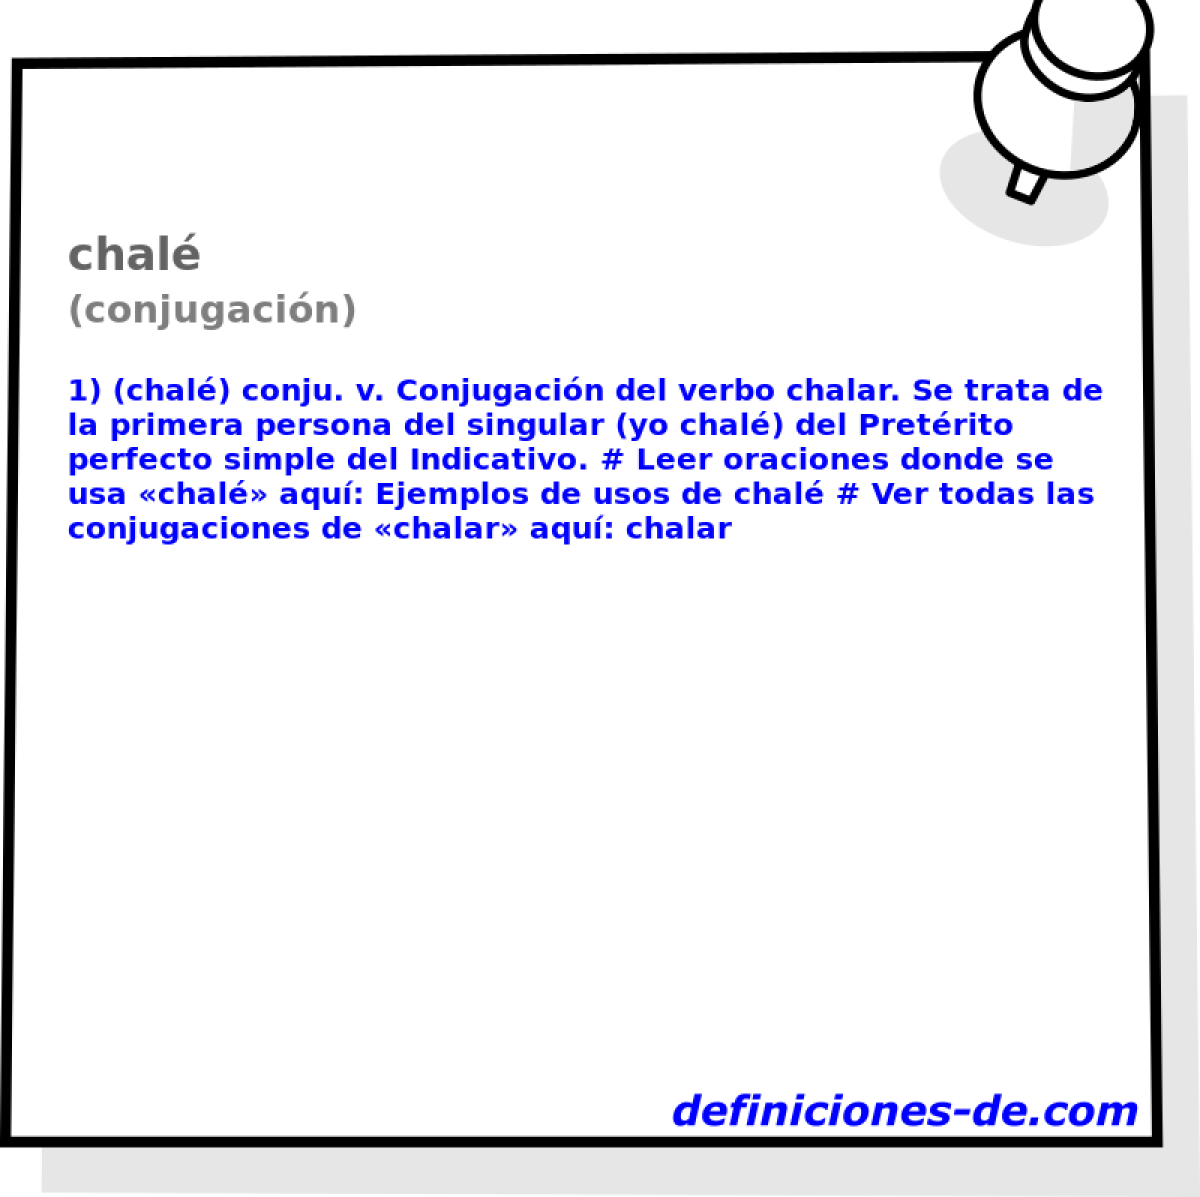 chal (conjugacin)